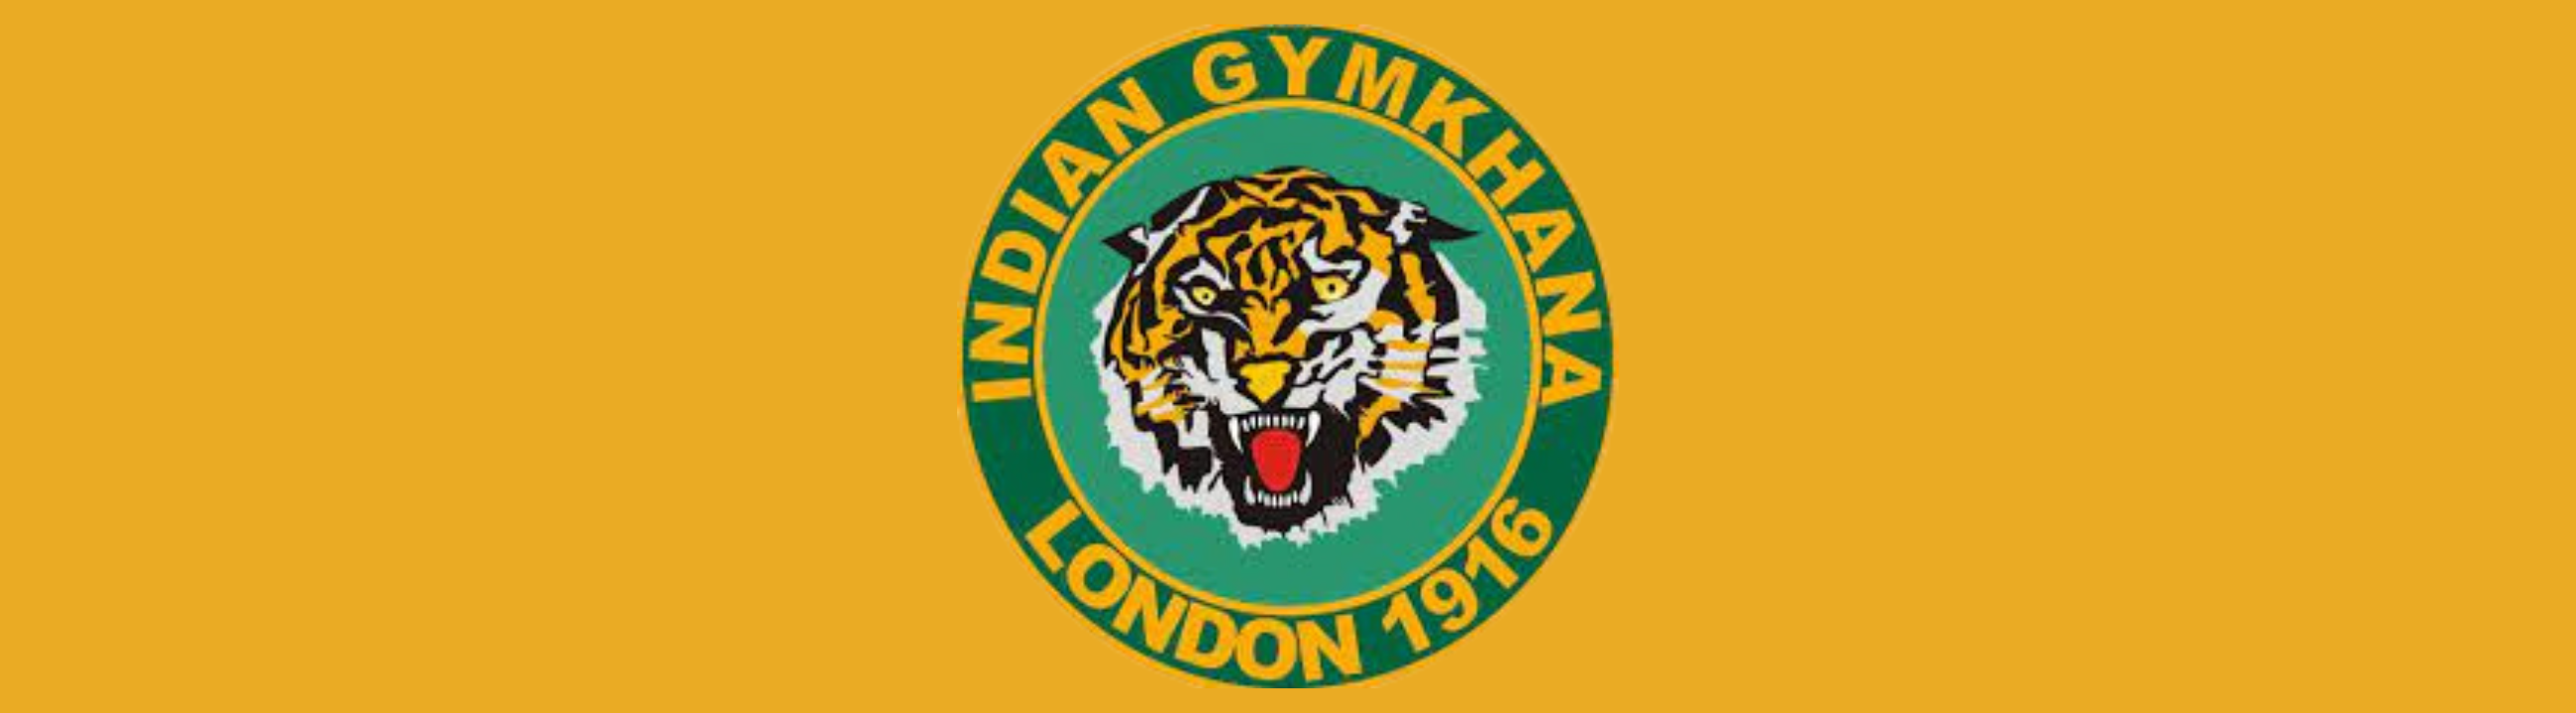 Indian Gymkhana Club - Hockey